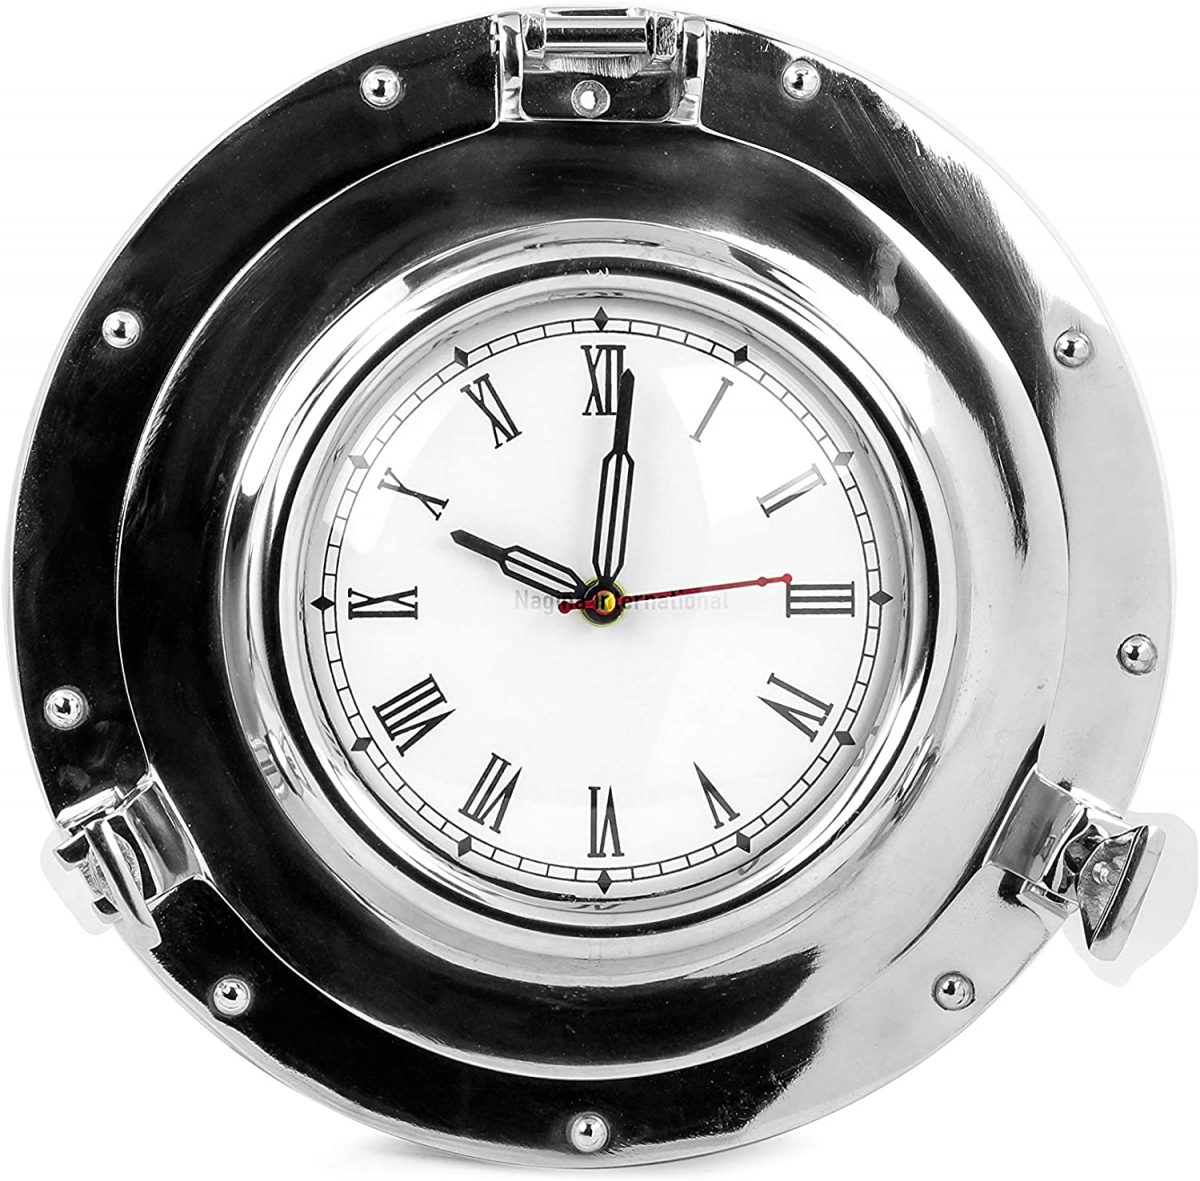 Nagina International Premium Nautical Brass Porthole Clock